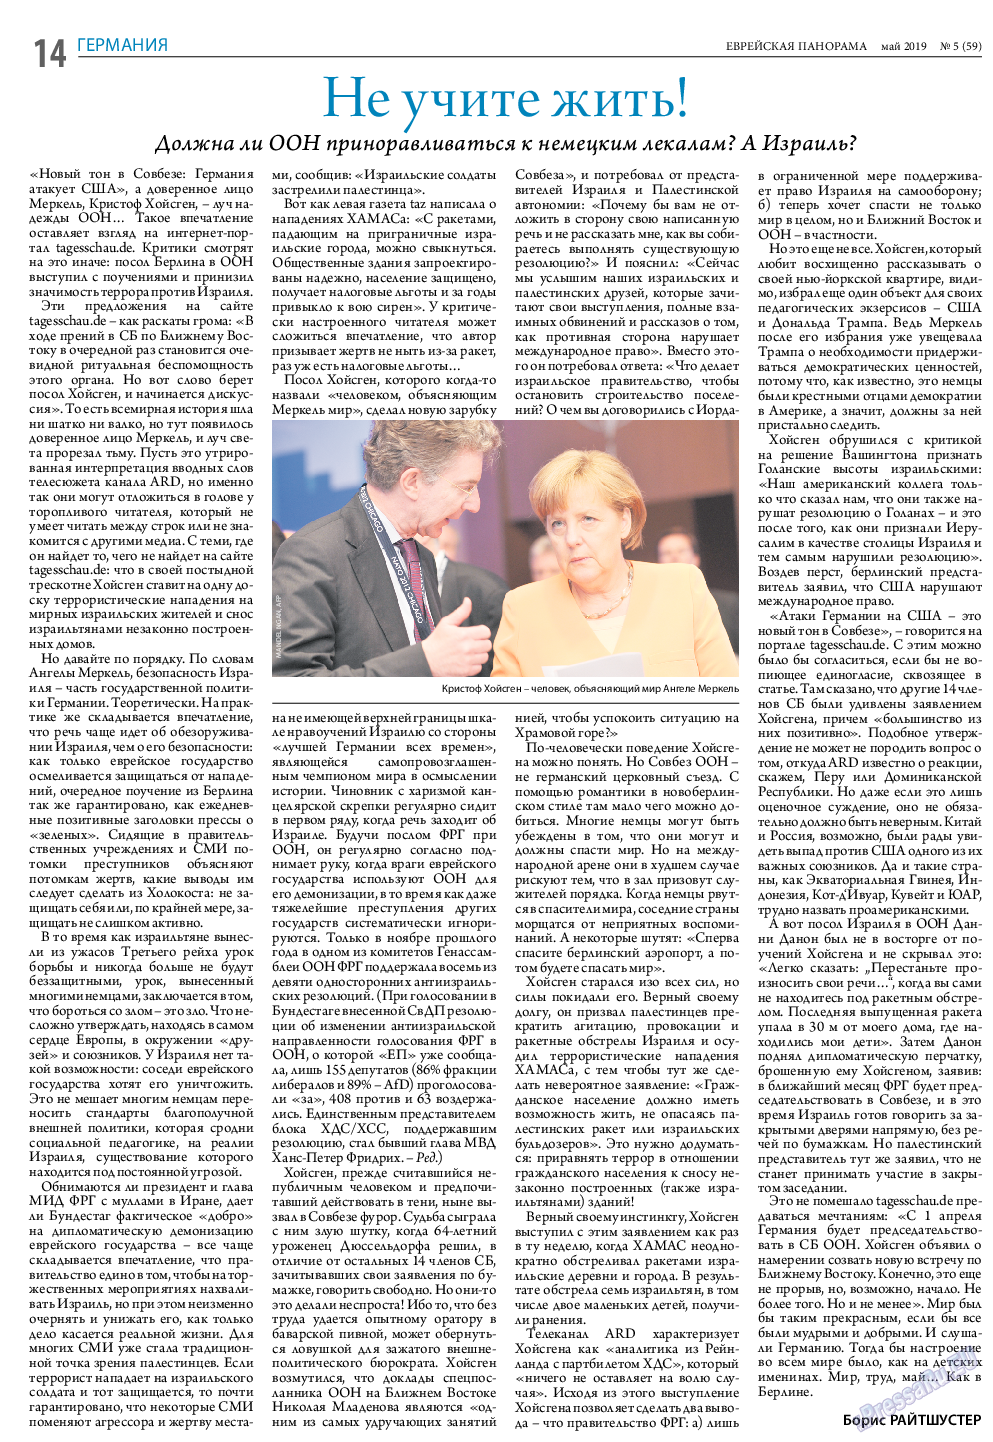 Еврейская панорама, газета. 2019 №5 стр.14